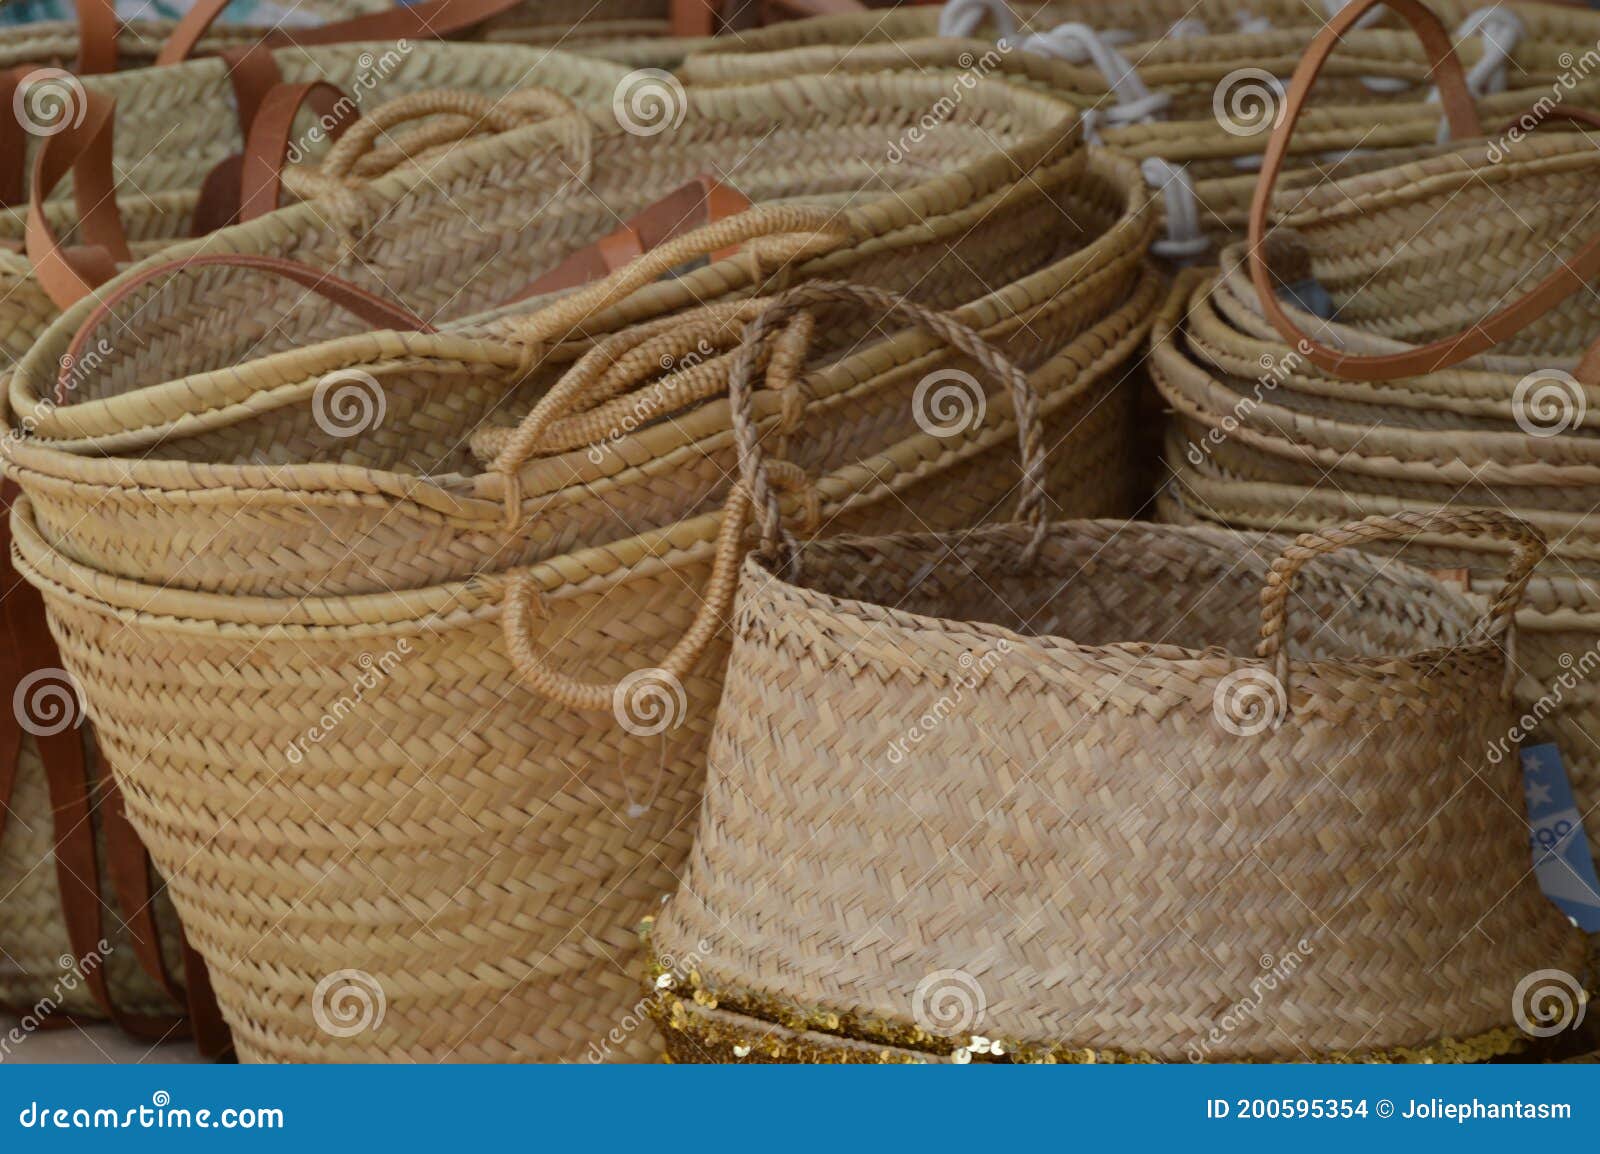 natural handmade each bag or shopping basket